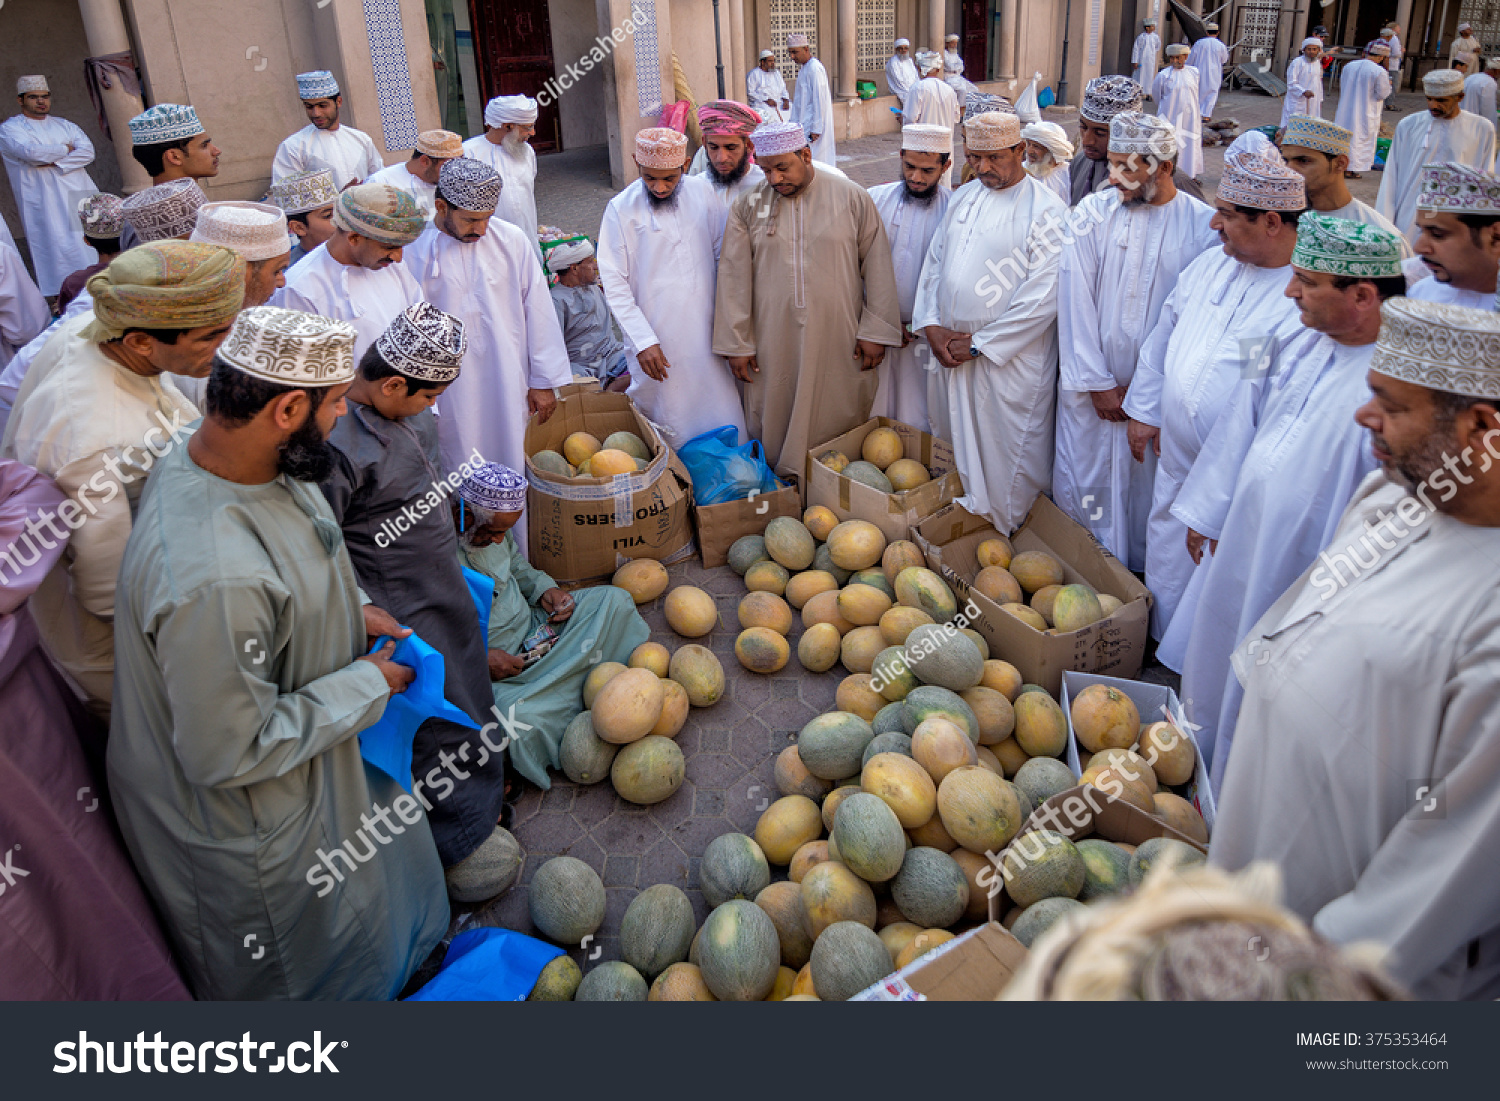 stock-photo-nizwa-oman-april-omani-man-buy-vegetables-at-the-traditional-vegetable-market-in-nizwa-375353464